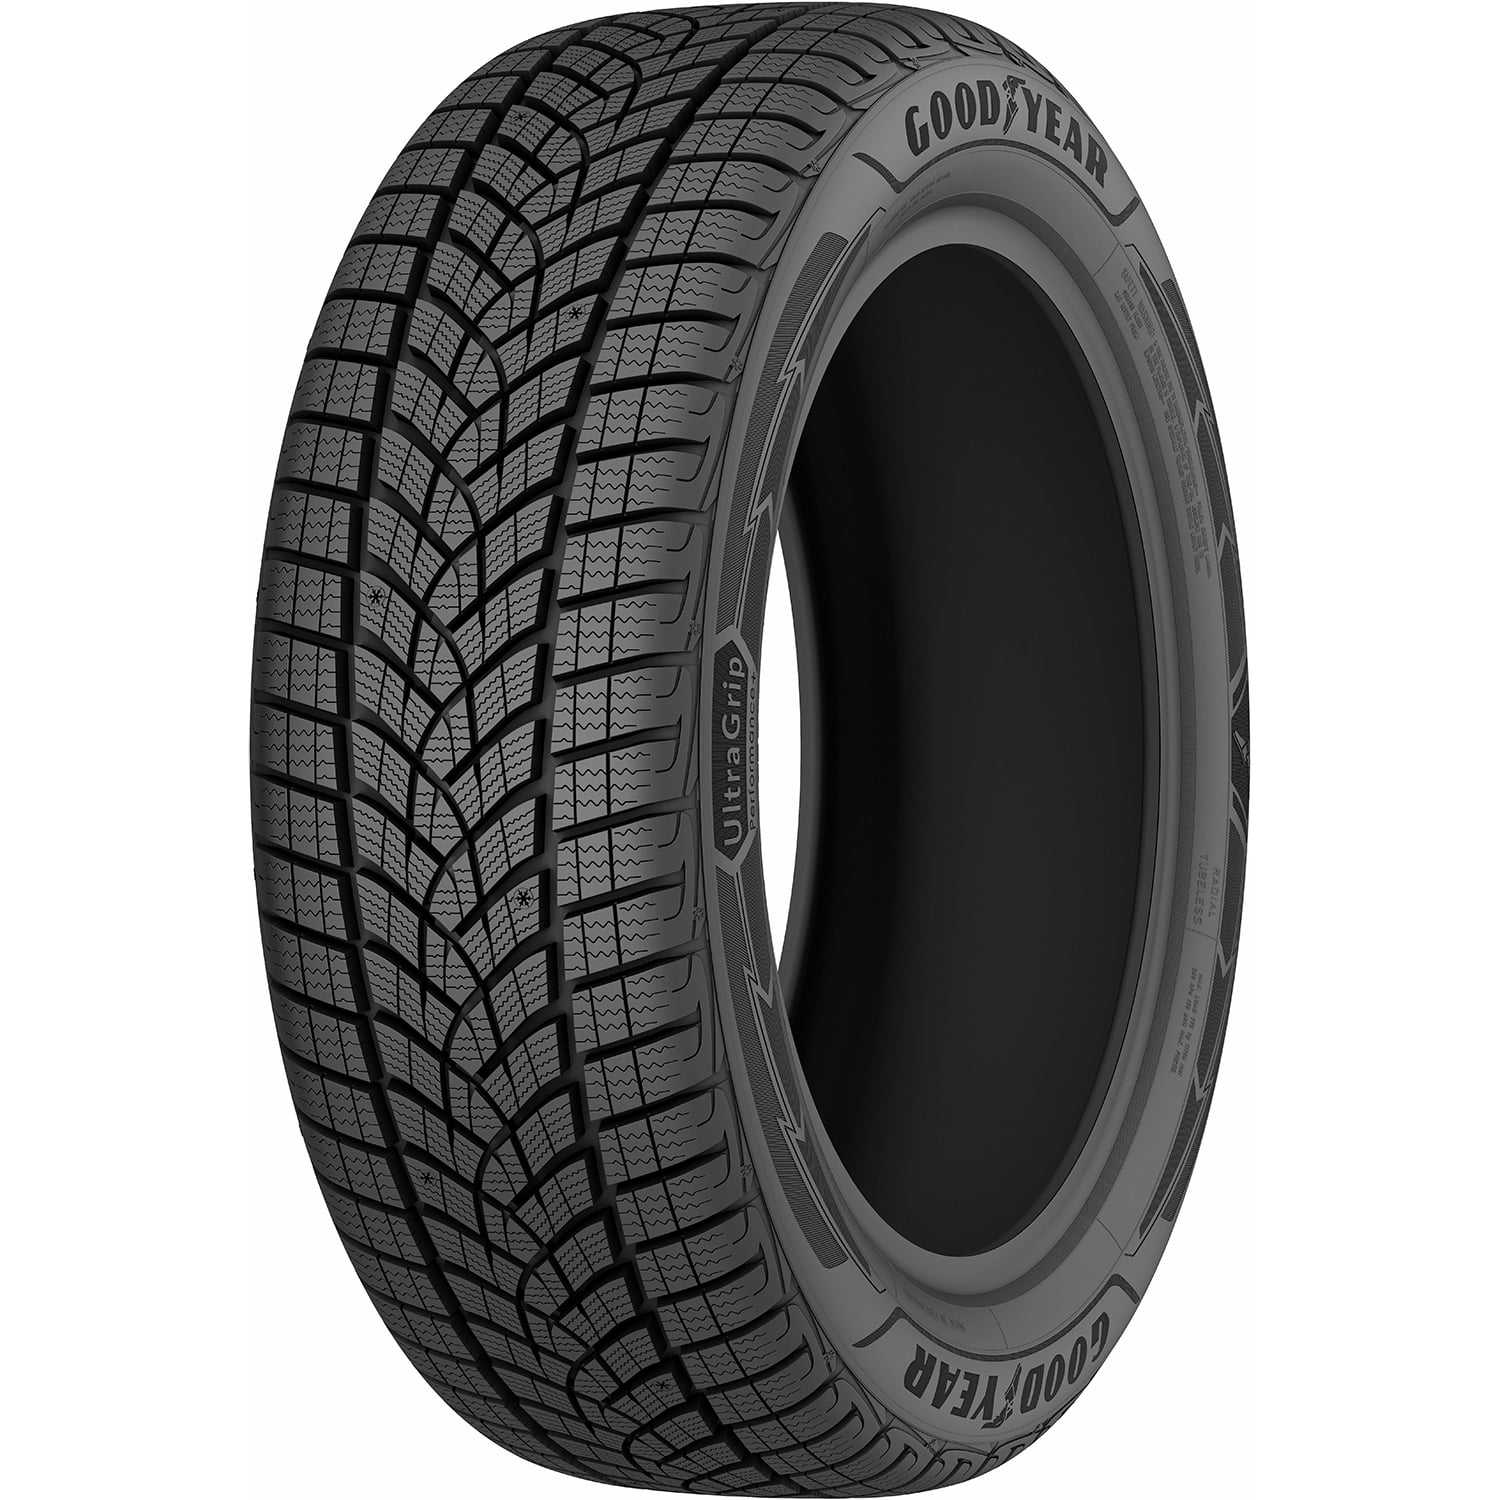 Tire Goodyear Ultra Grip Performance + SUV 235/60R17 102H (Studless) Snow  Winter